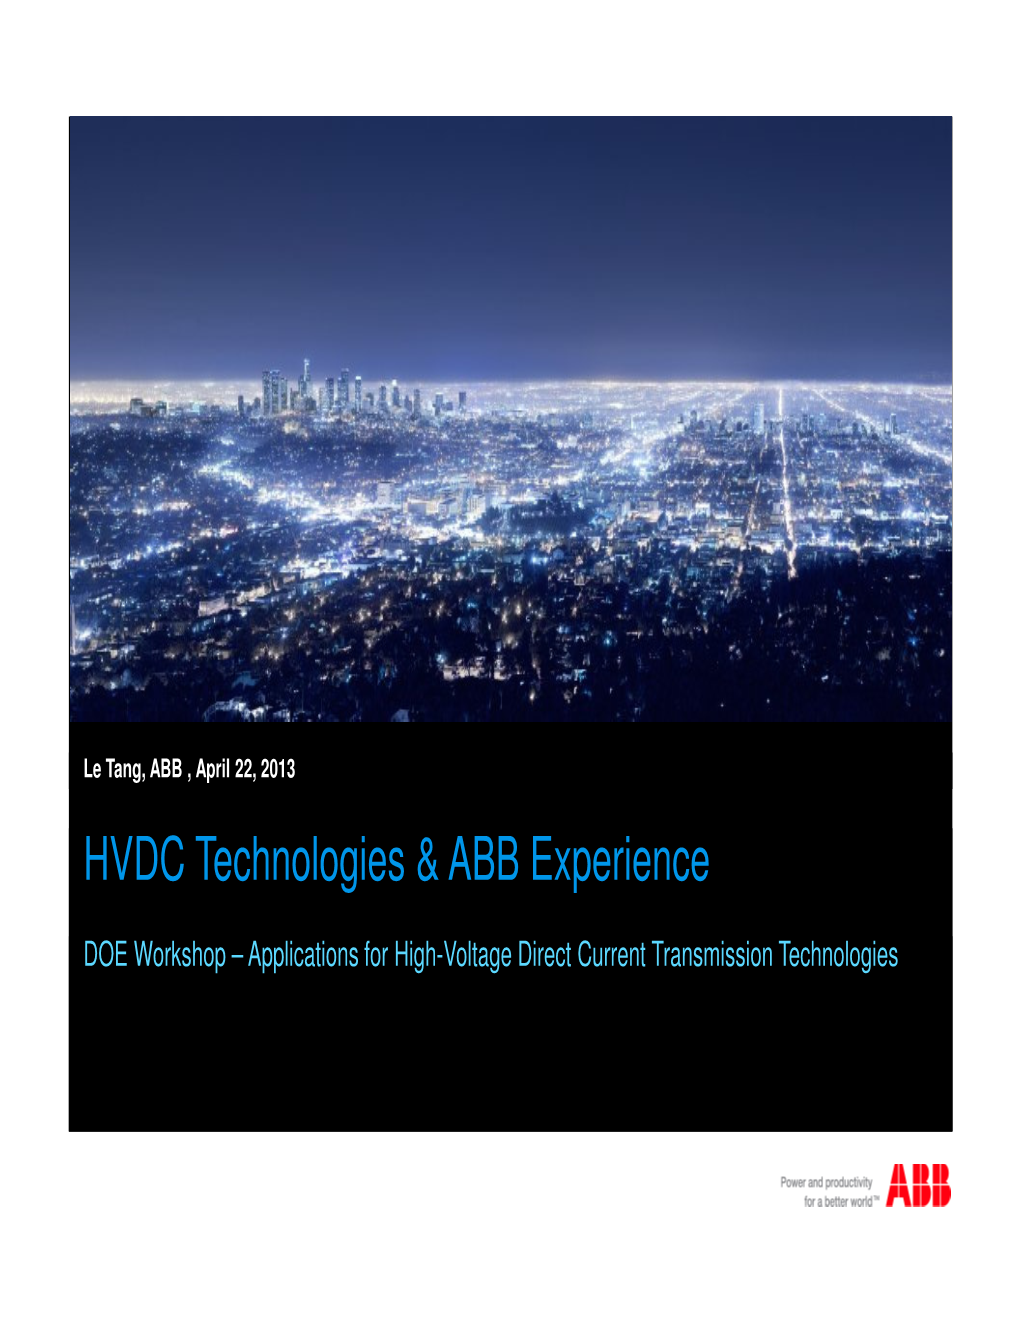 HVDC Technologies & ABB Experience